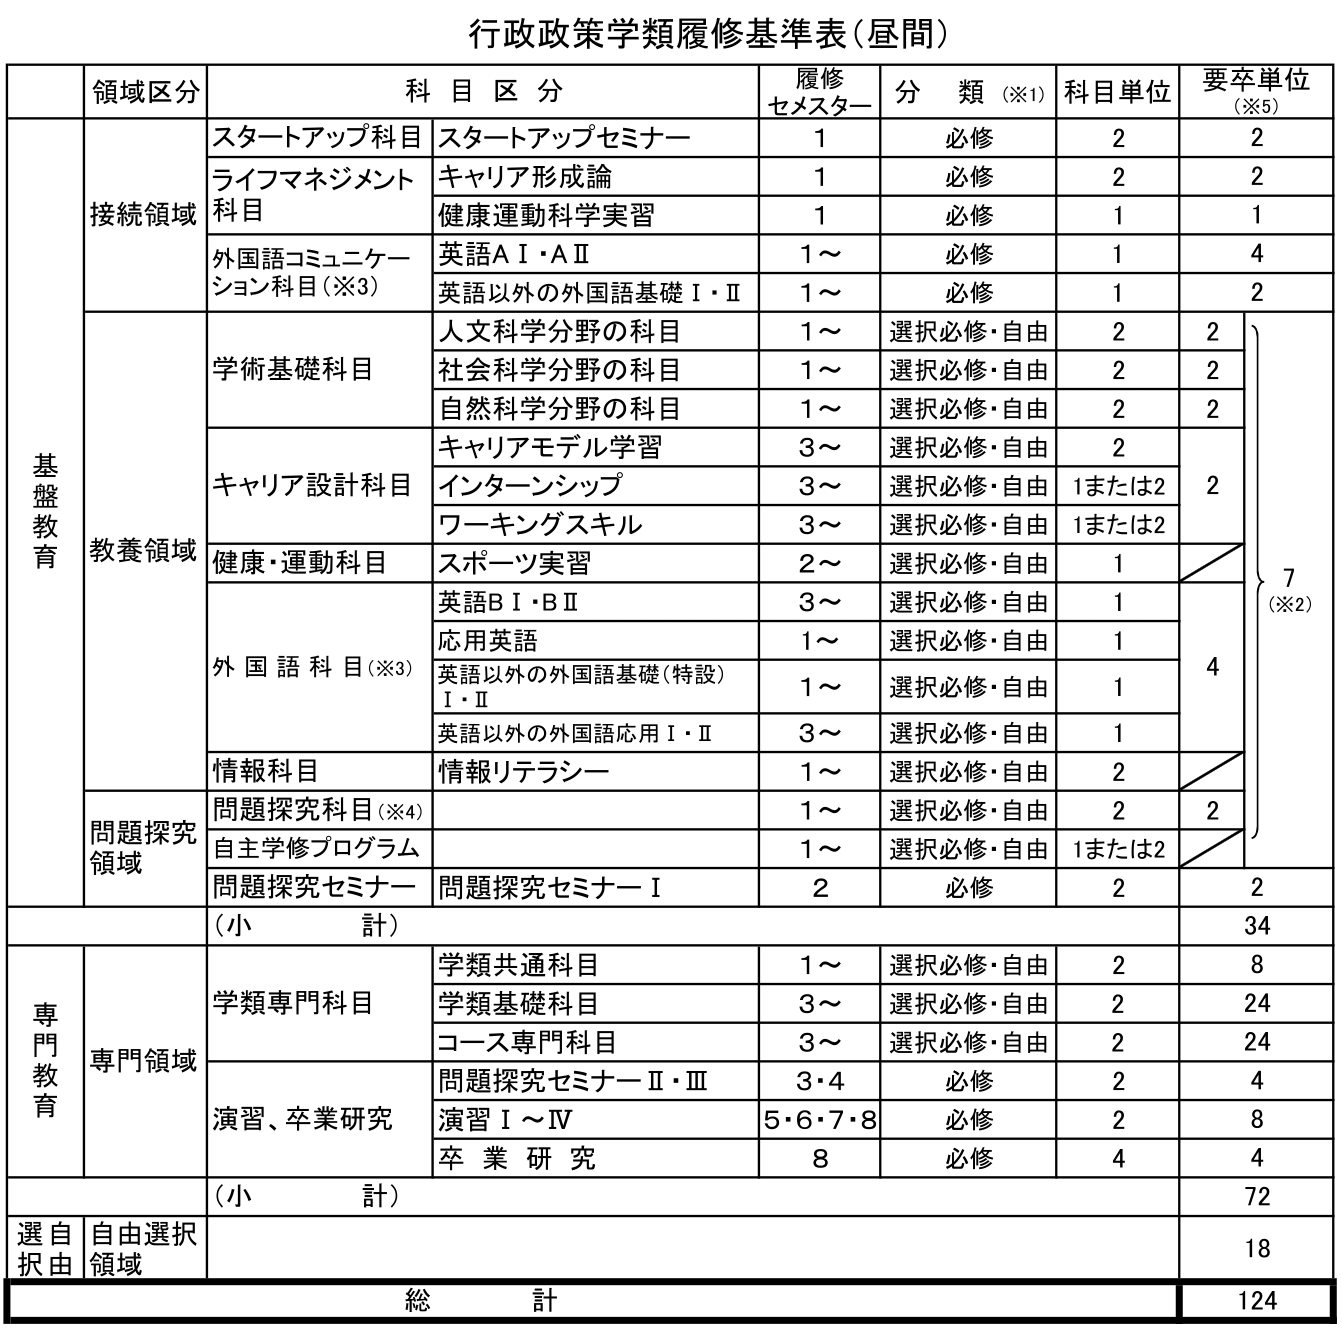 http://kyoumu.adb.fukushima-u.ac.jp/guide/2019/ads/Files/2019/04/%E8%A1%8C%E6%94%BF%E6%94%BF%E7%AD%96%E5%AD%A6%E9%A1%9E%E7%90%86%E6%95%B0%E5%9F%BA%E6%BA%96%E8%A1%A8%EF%BC%88%E6%98%BC%E9%96%93%EF%BC%89.png